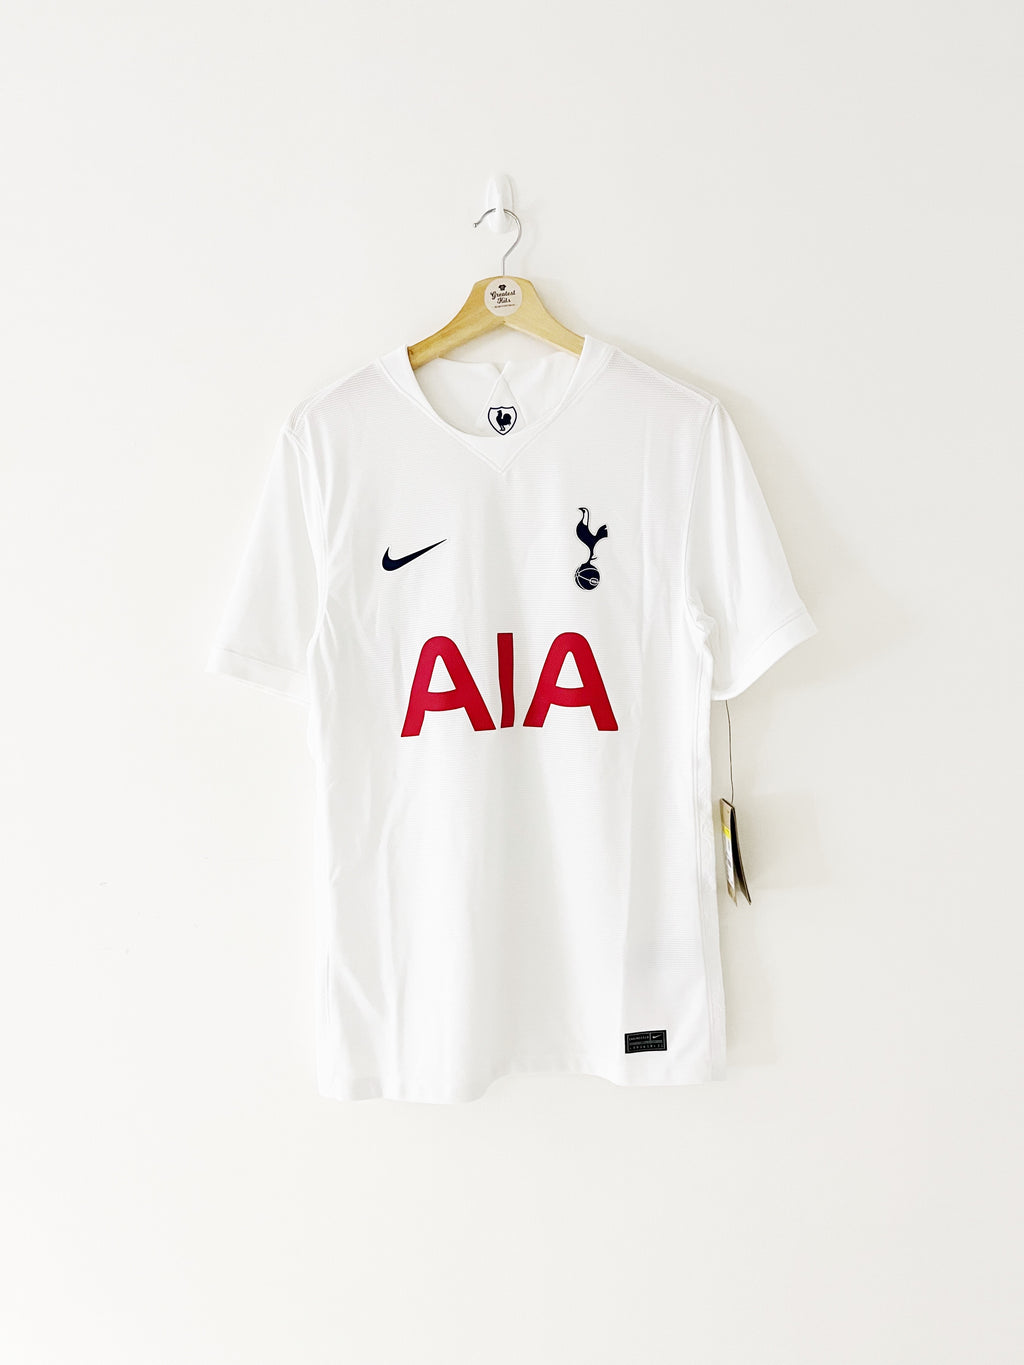 2021/22 Tottenham Home Shirt (S) BNWT